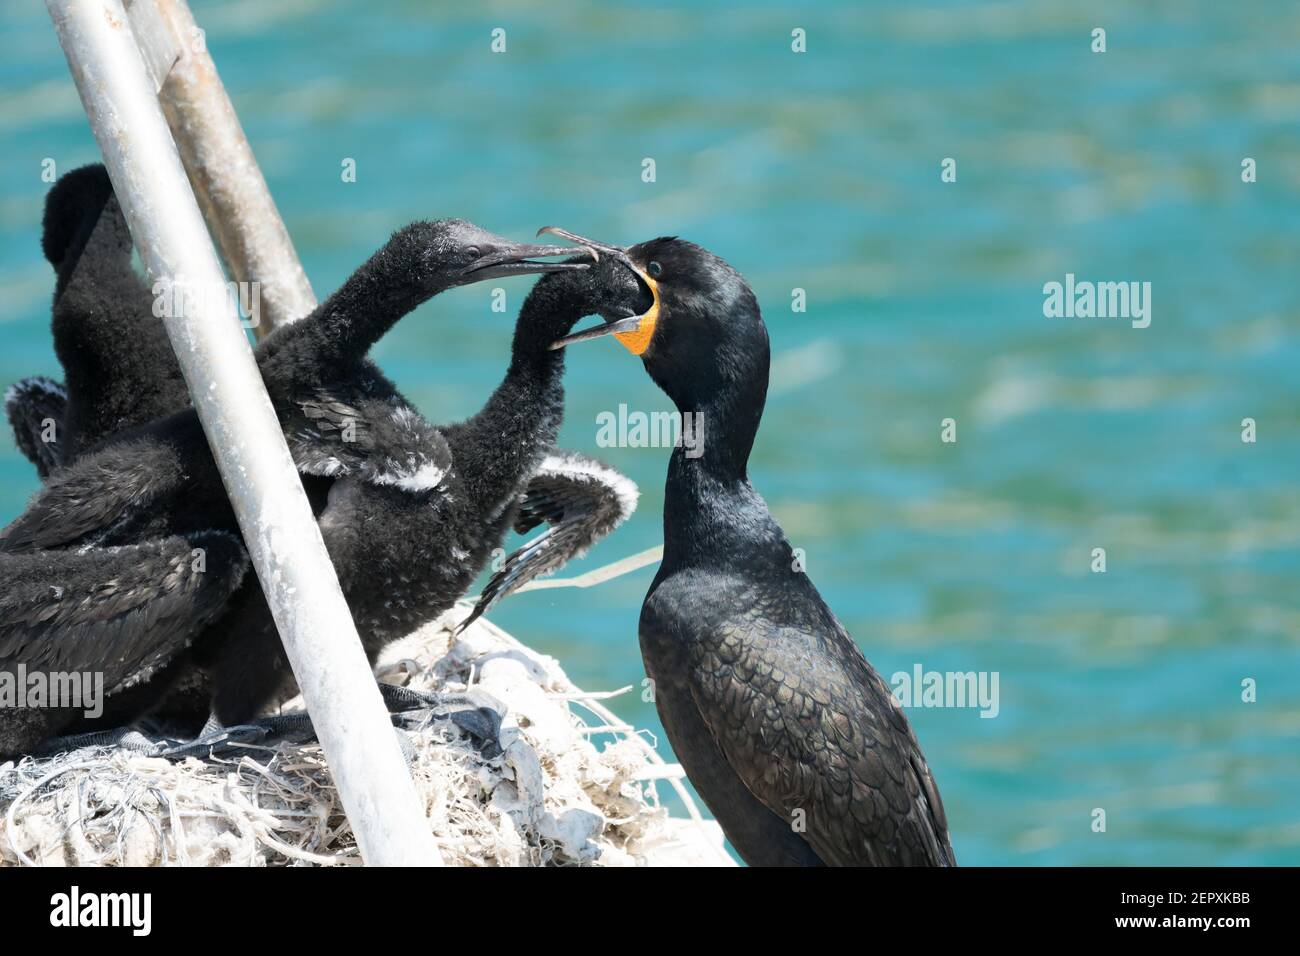 Cormorant or Shag birds (Phalacrocoracidae) in a nest, adult feeding the babies, concept marine and aquatic birds closeup Stock Photo